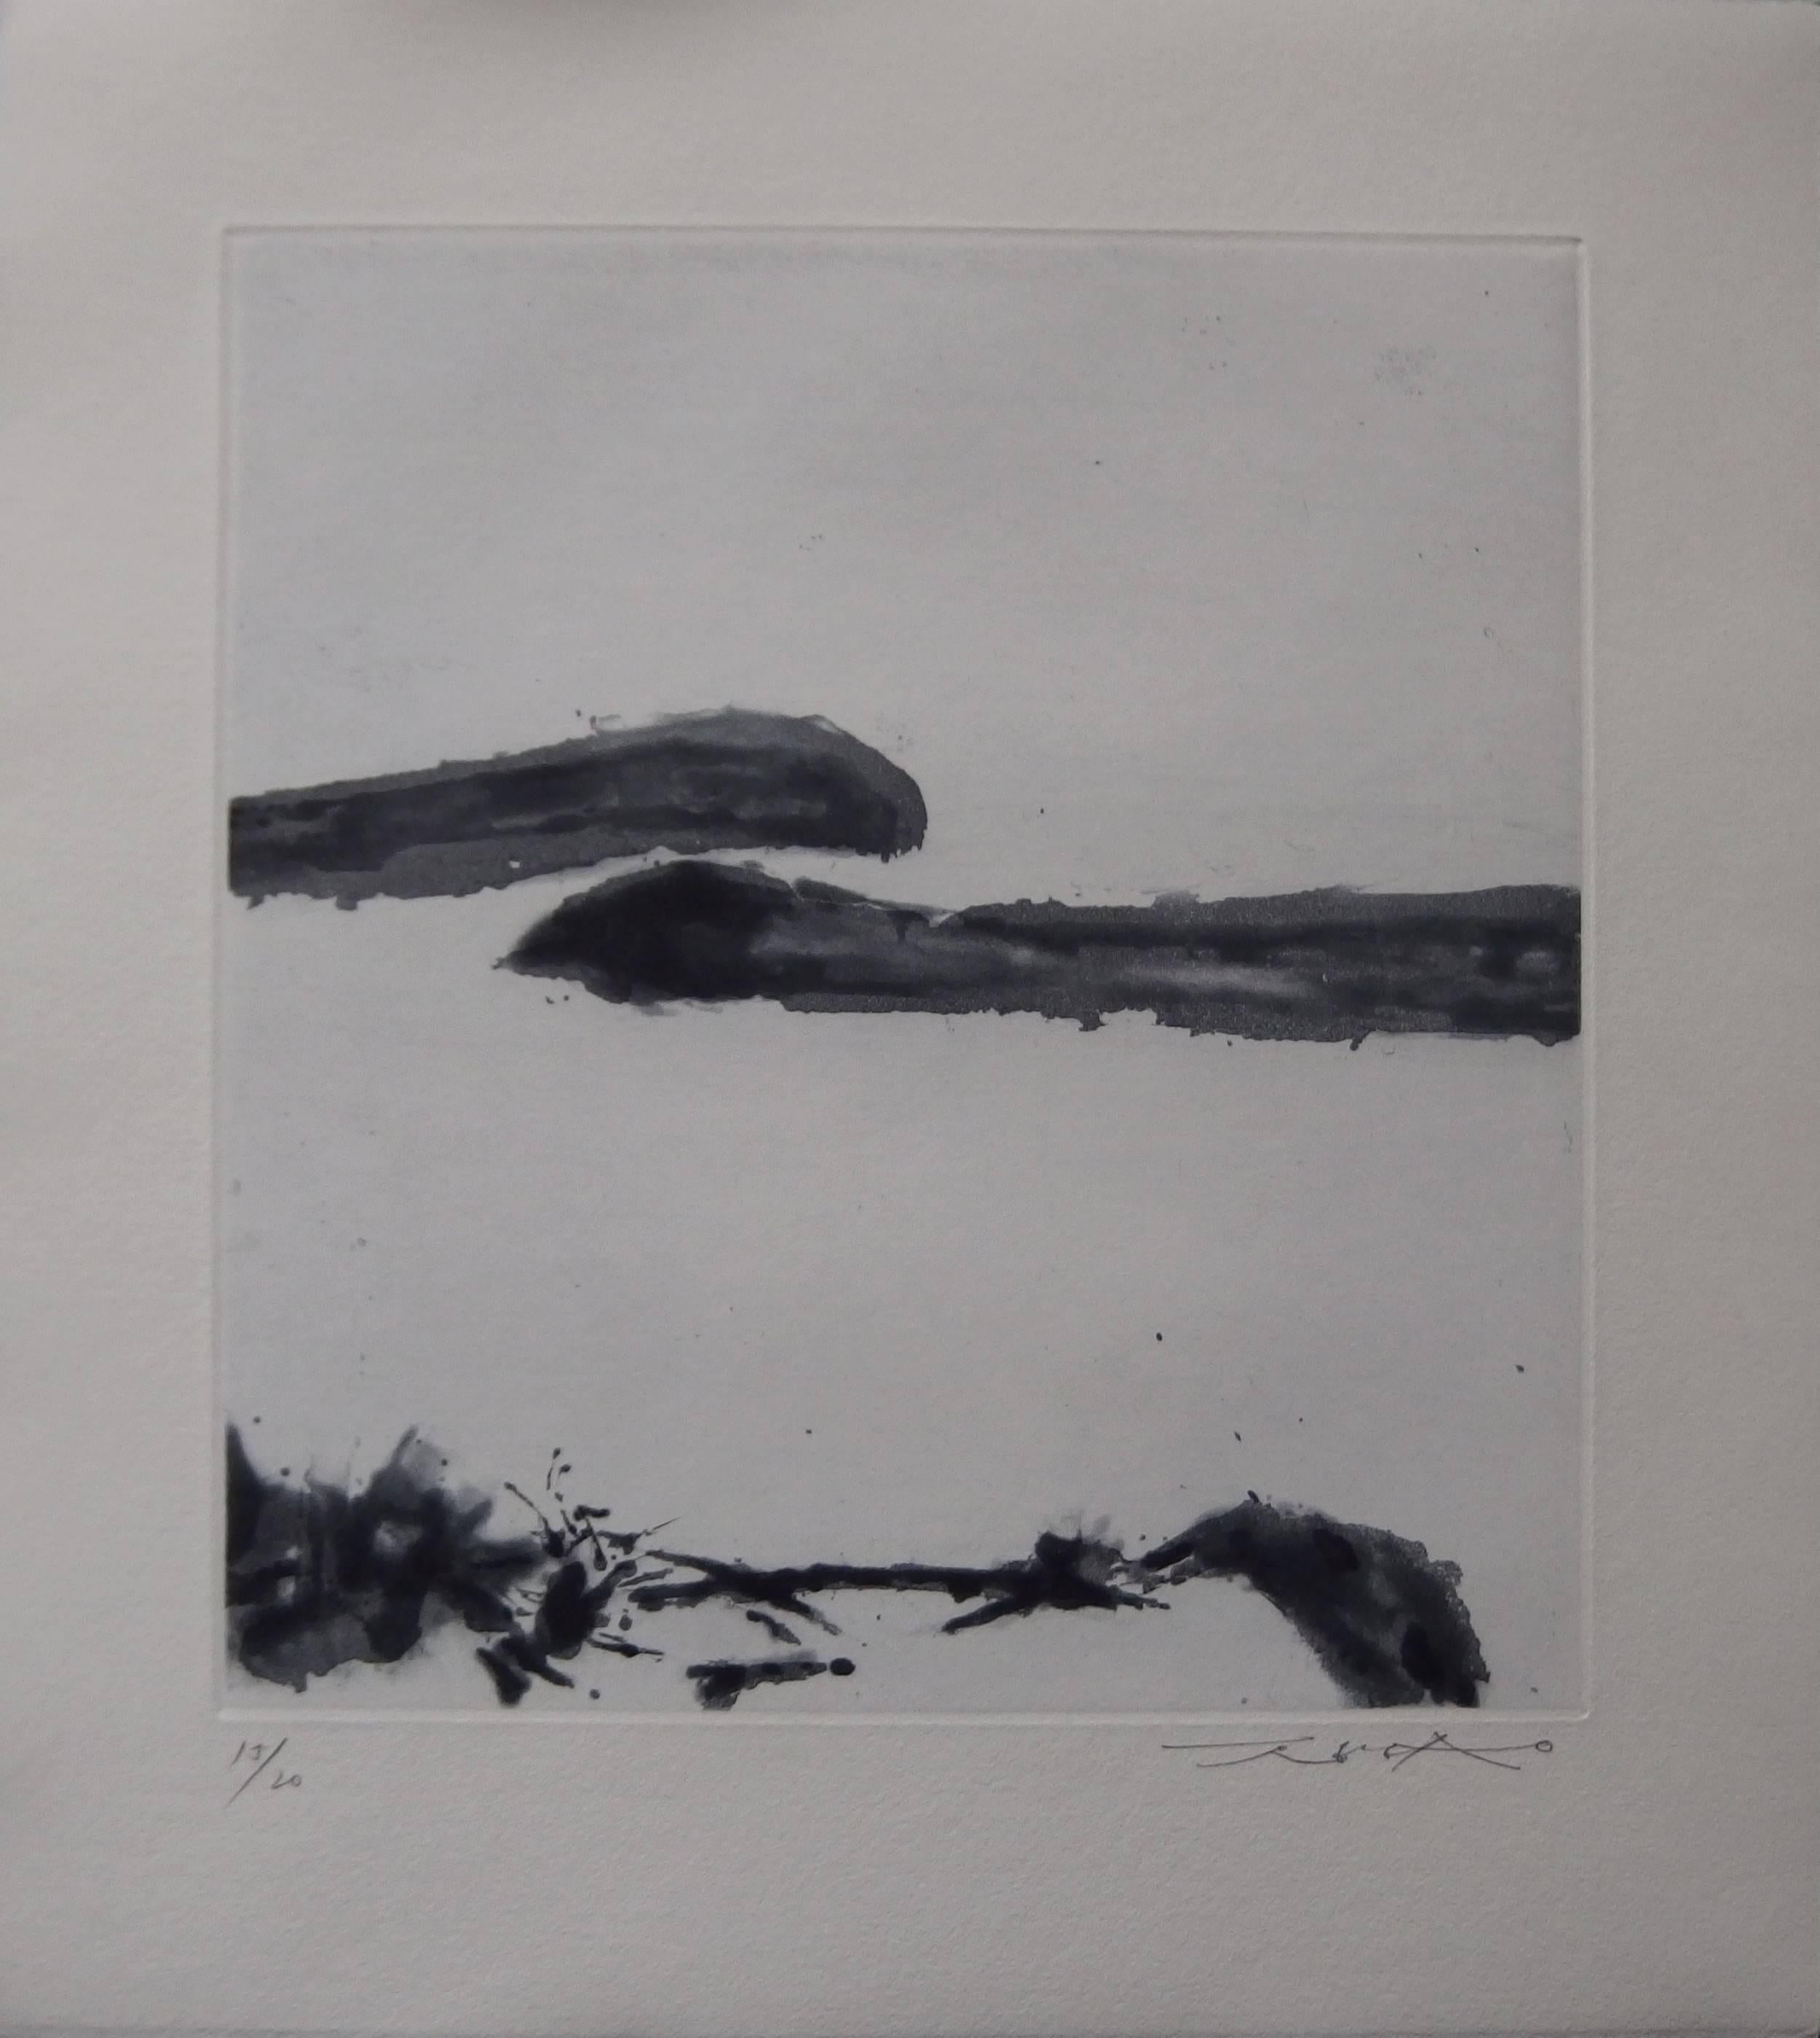 Zao Wou-Ki Landscape Print - Abstract Landscape - Original handsigned etching - 20 copies